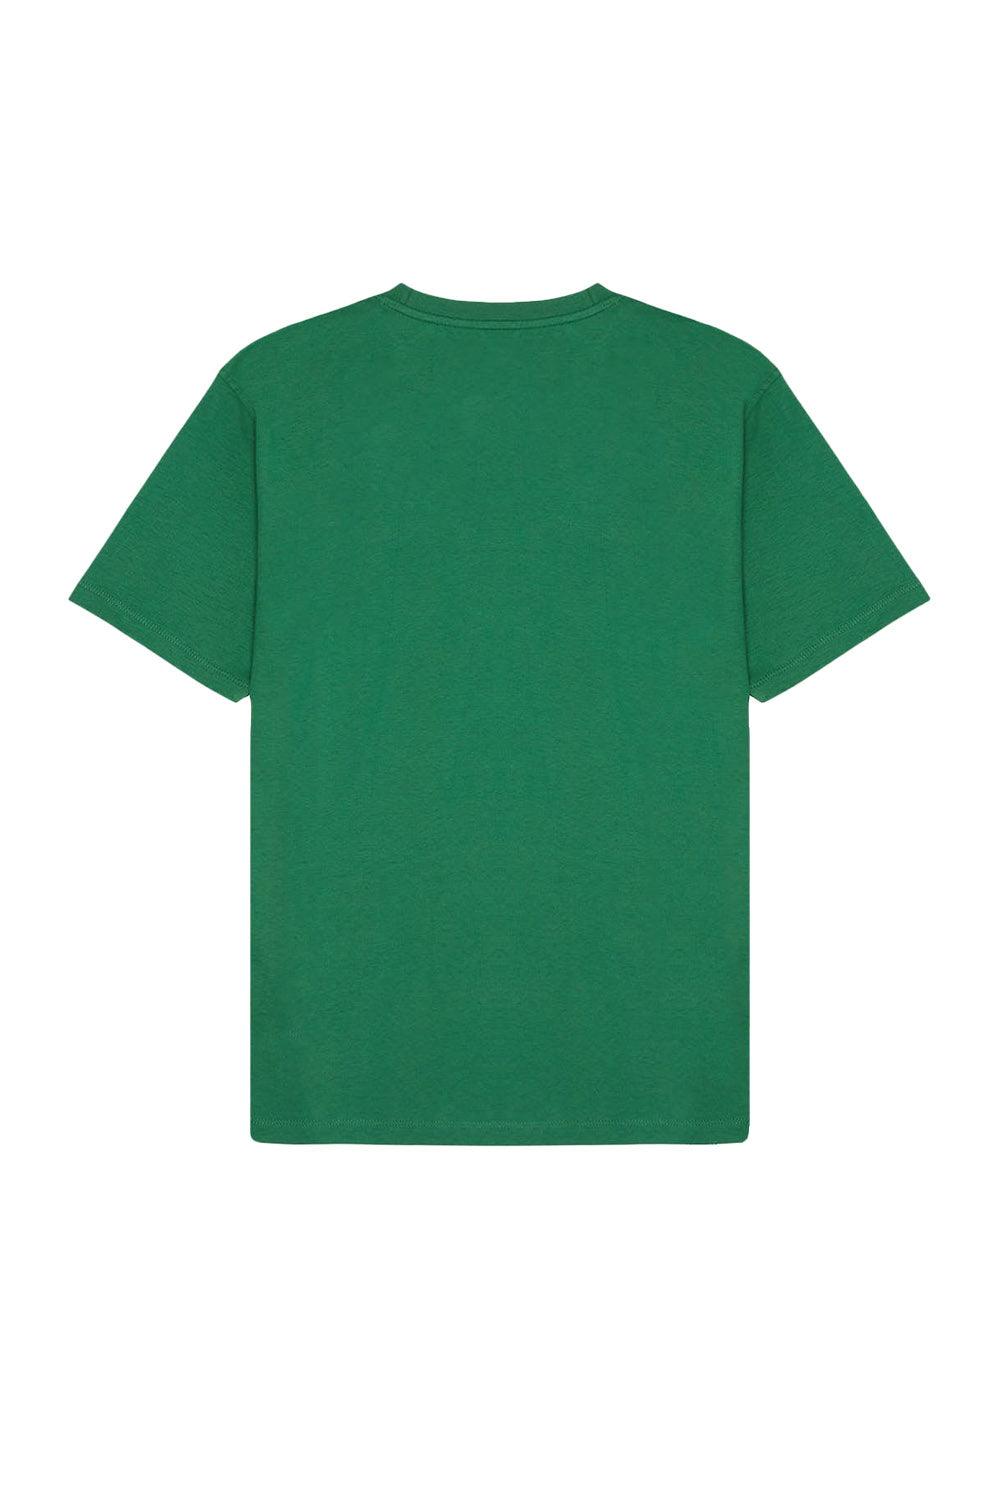 WWF Market | Geyik T-shirt - Yeşil 6 | Milagron